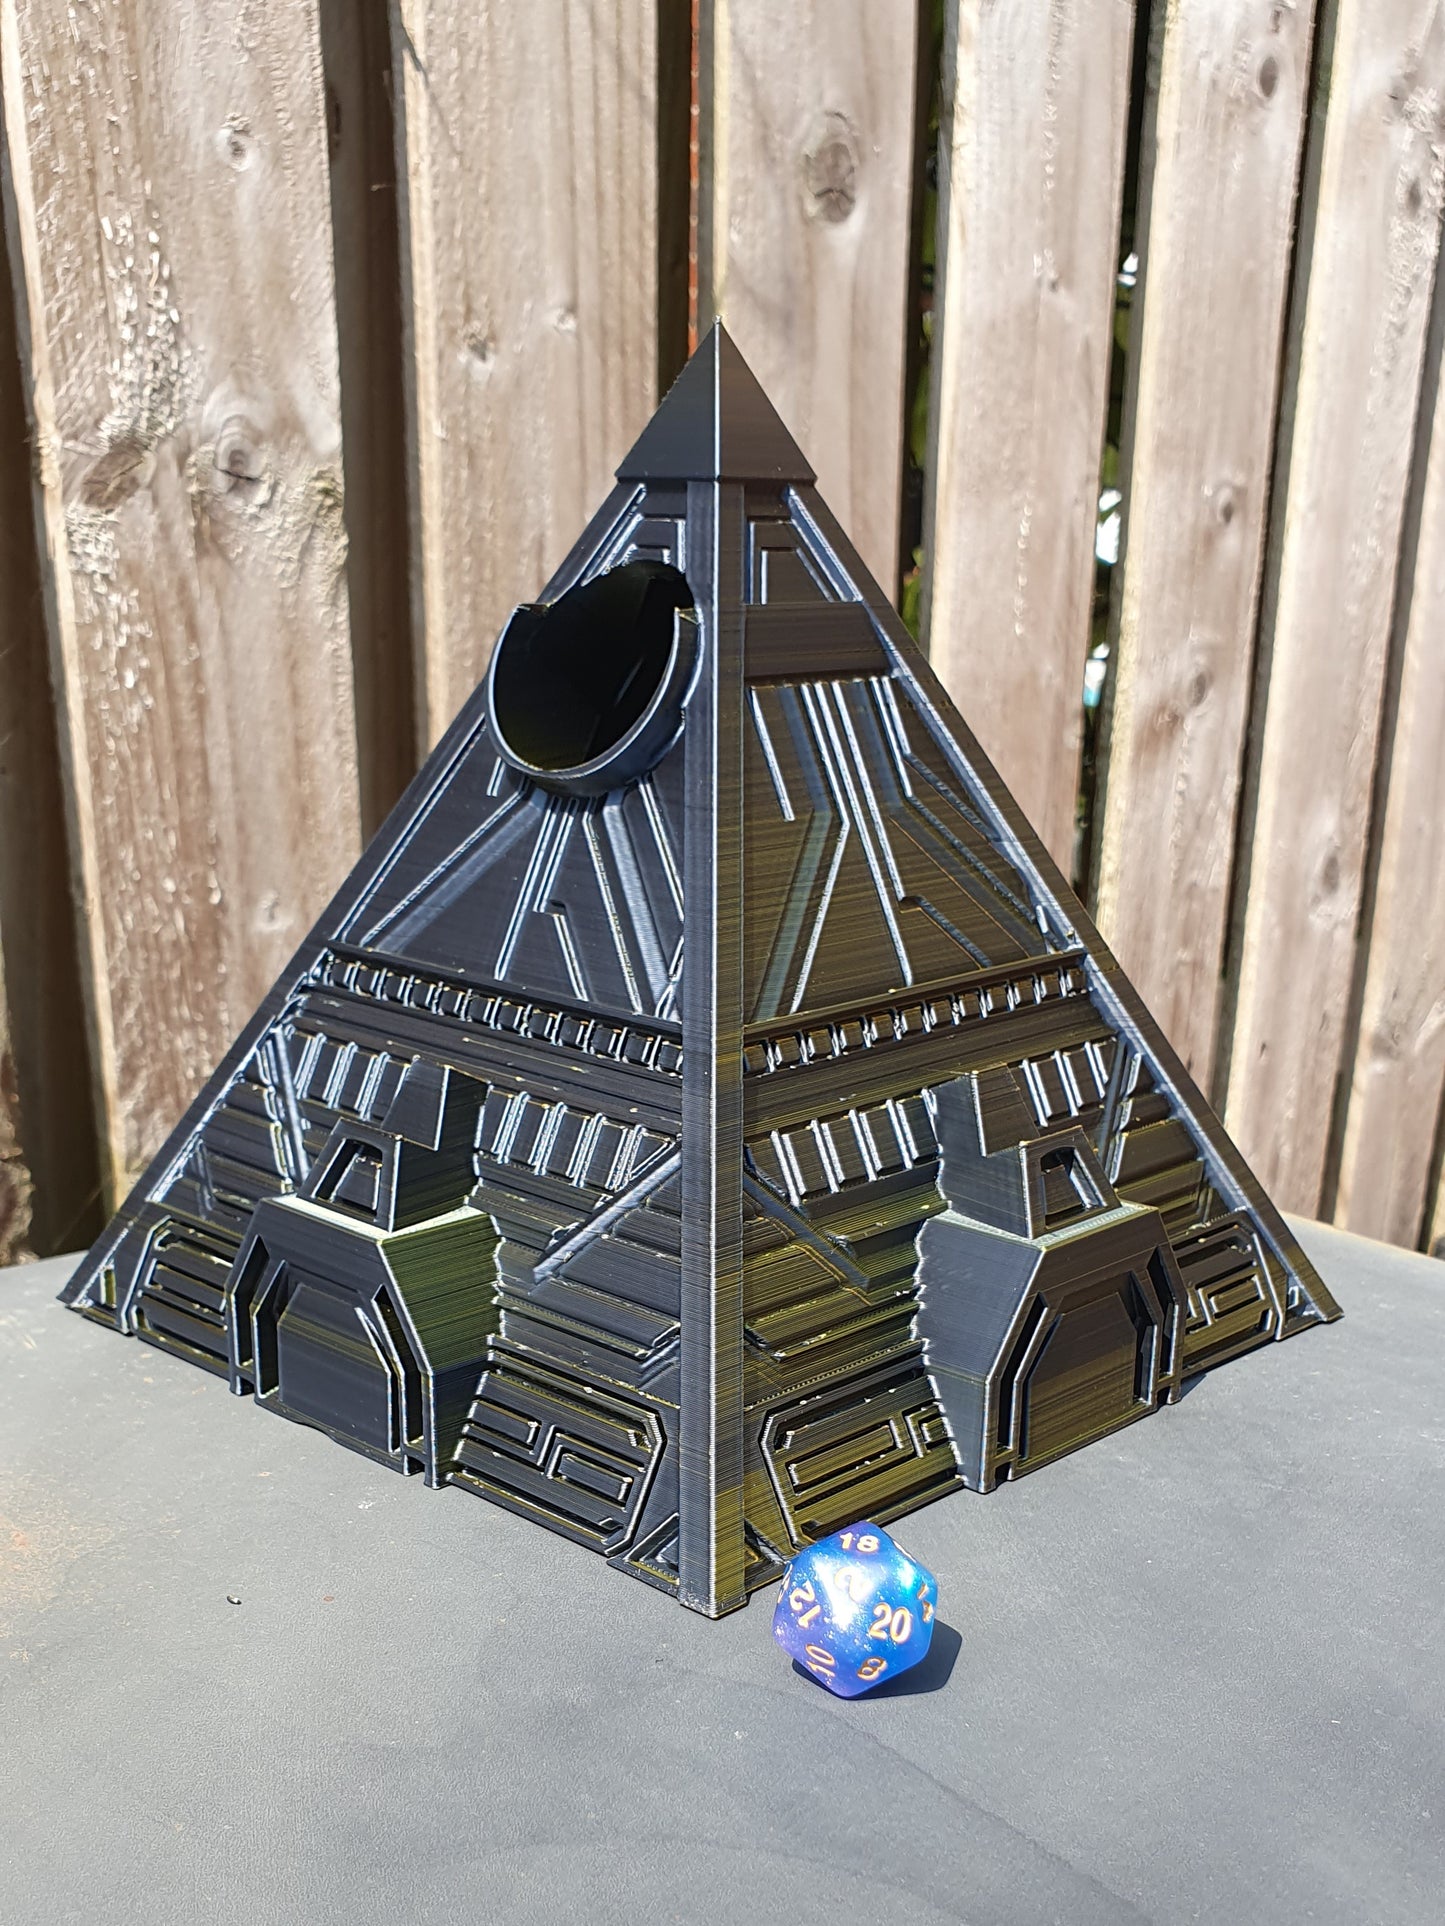 Alien Pyramid Dice Tower